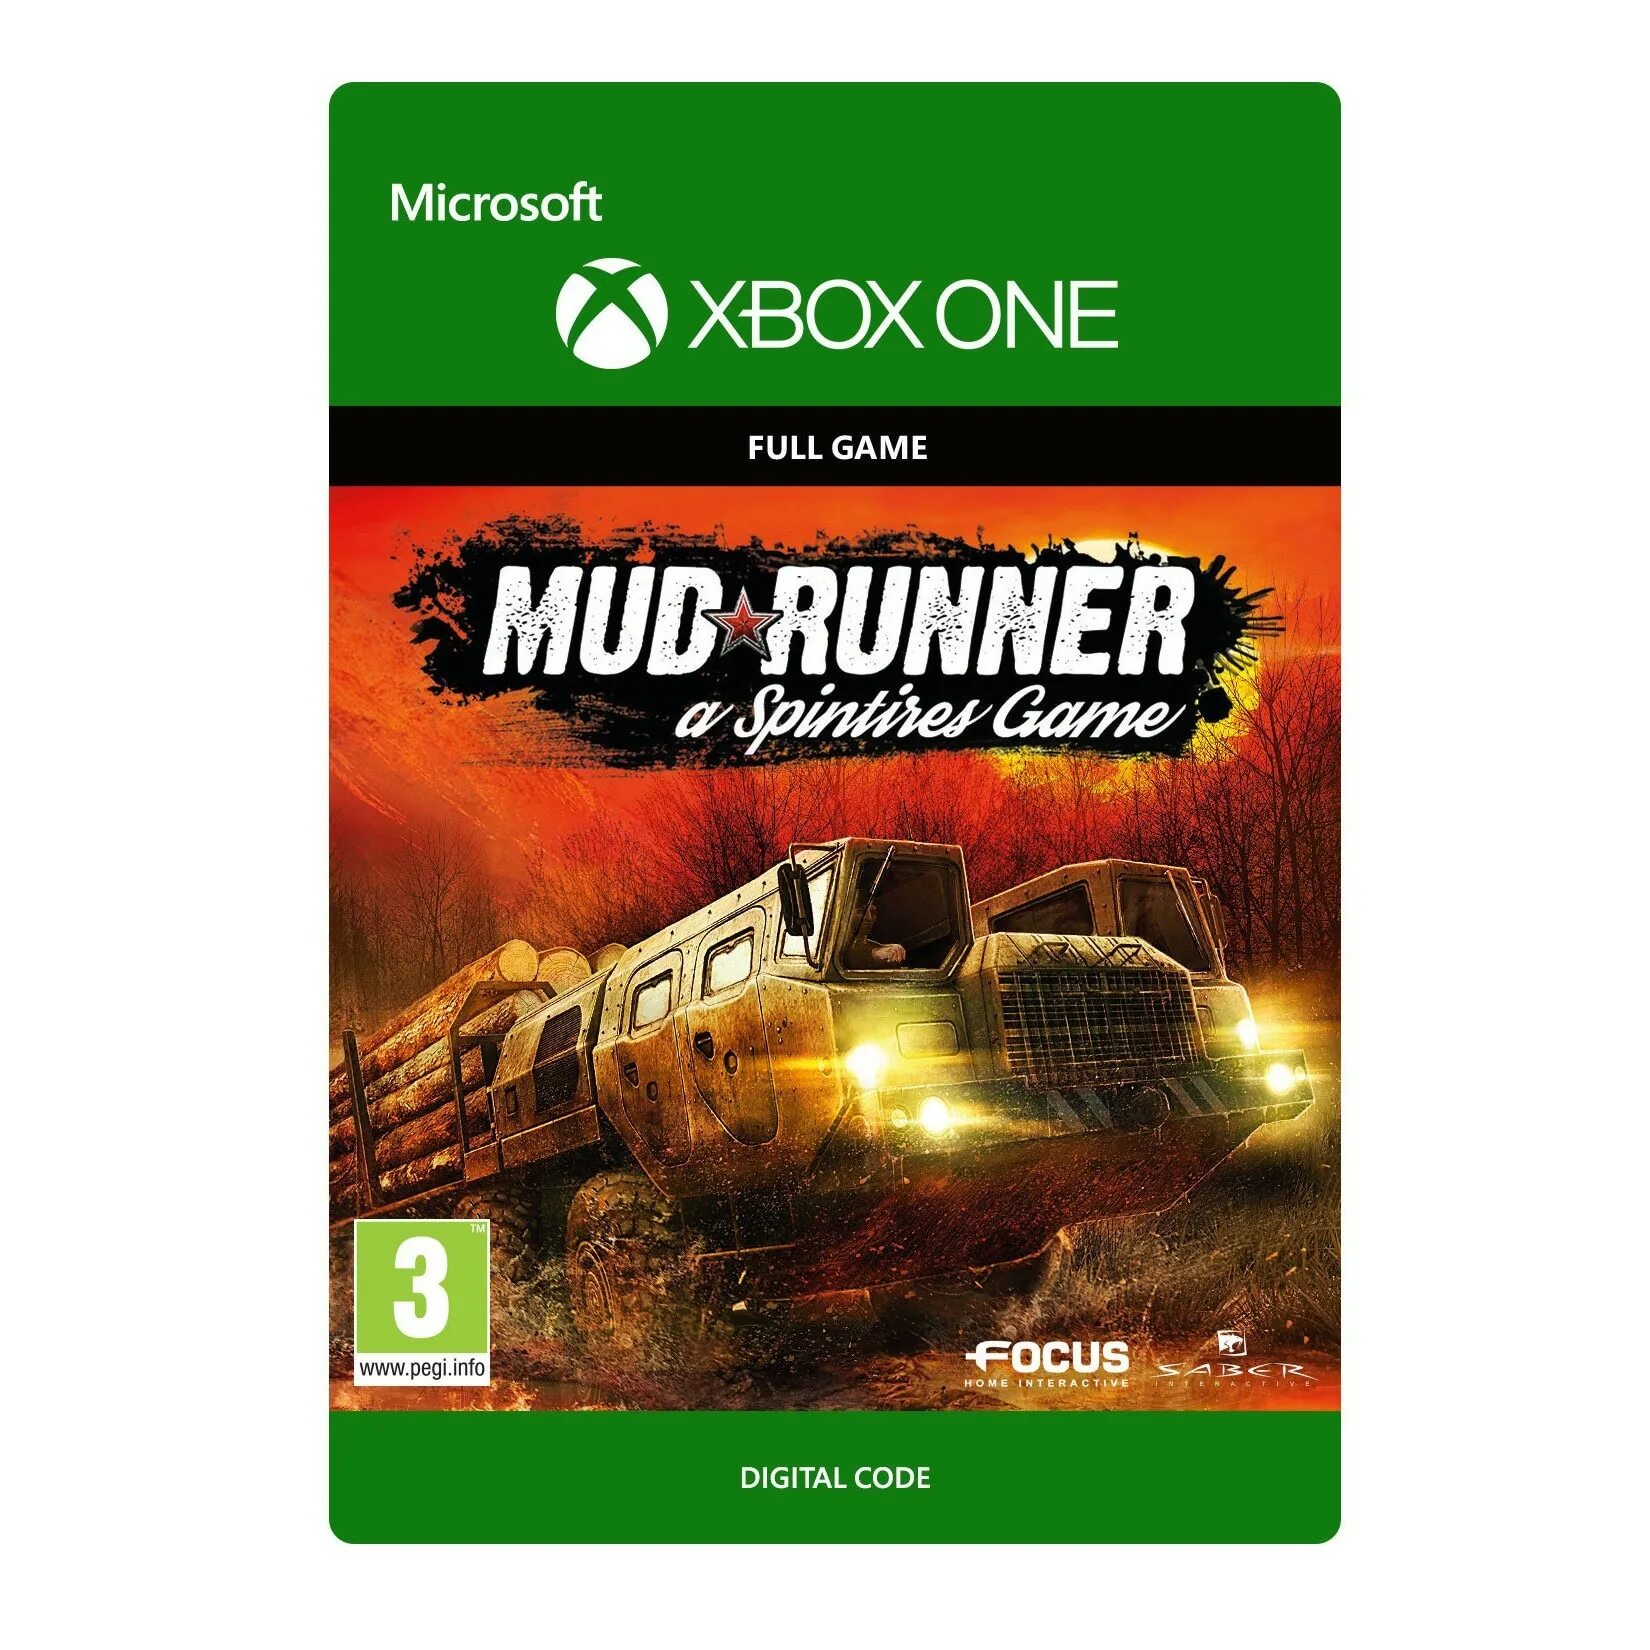 MUDRUNNER Xbox. Мод раннер Xbox. MUDRUNNER Xbox Series s. Спинтайрес на Xbox Series x. Mudrunner expedition xbox купить